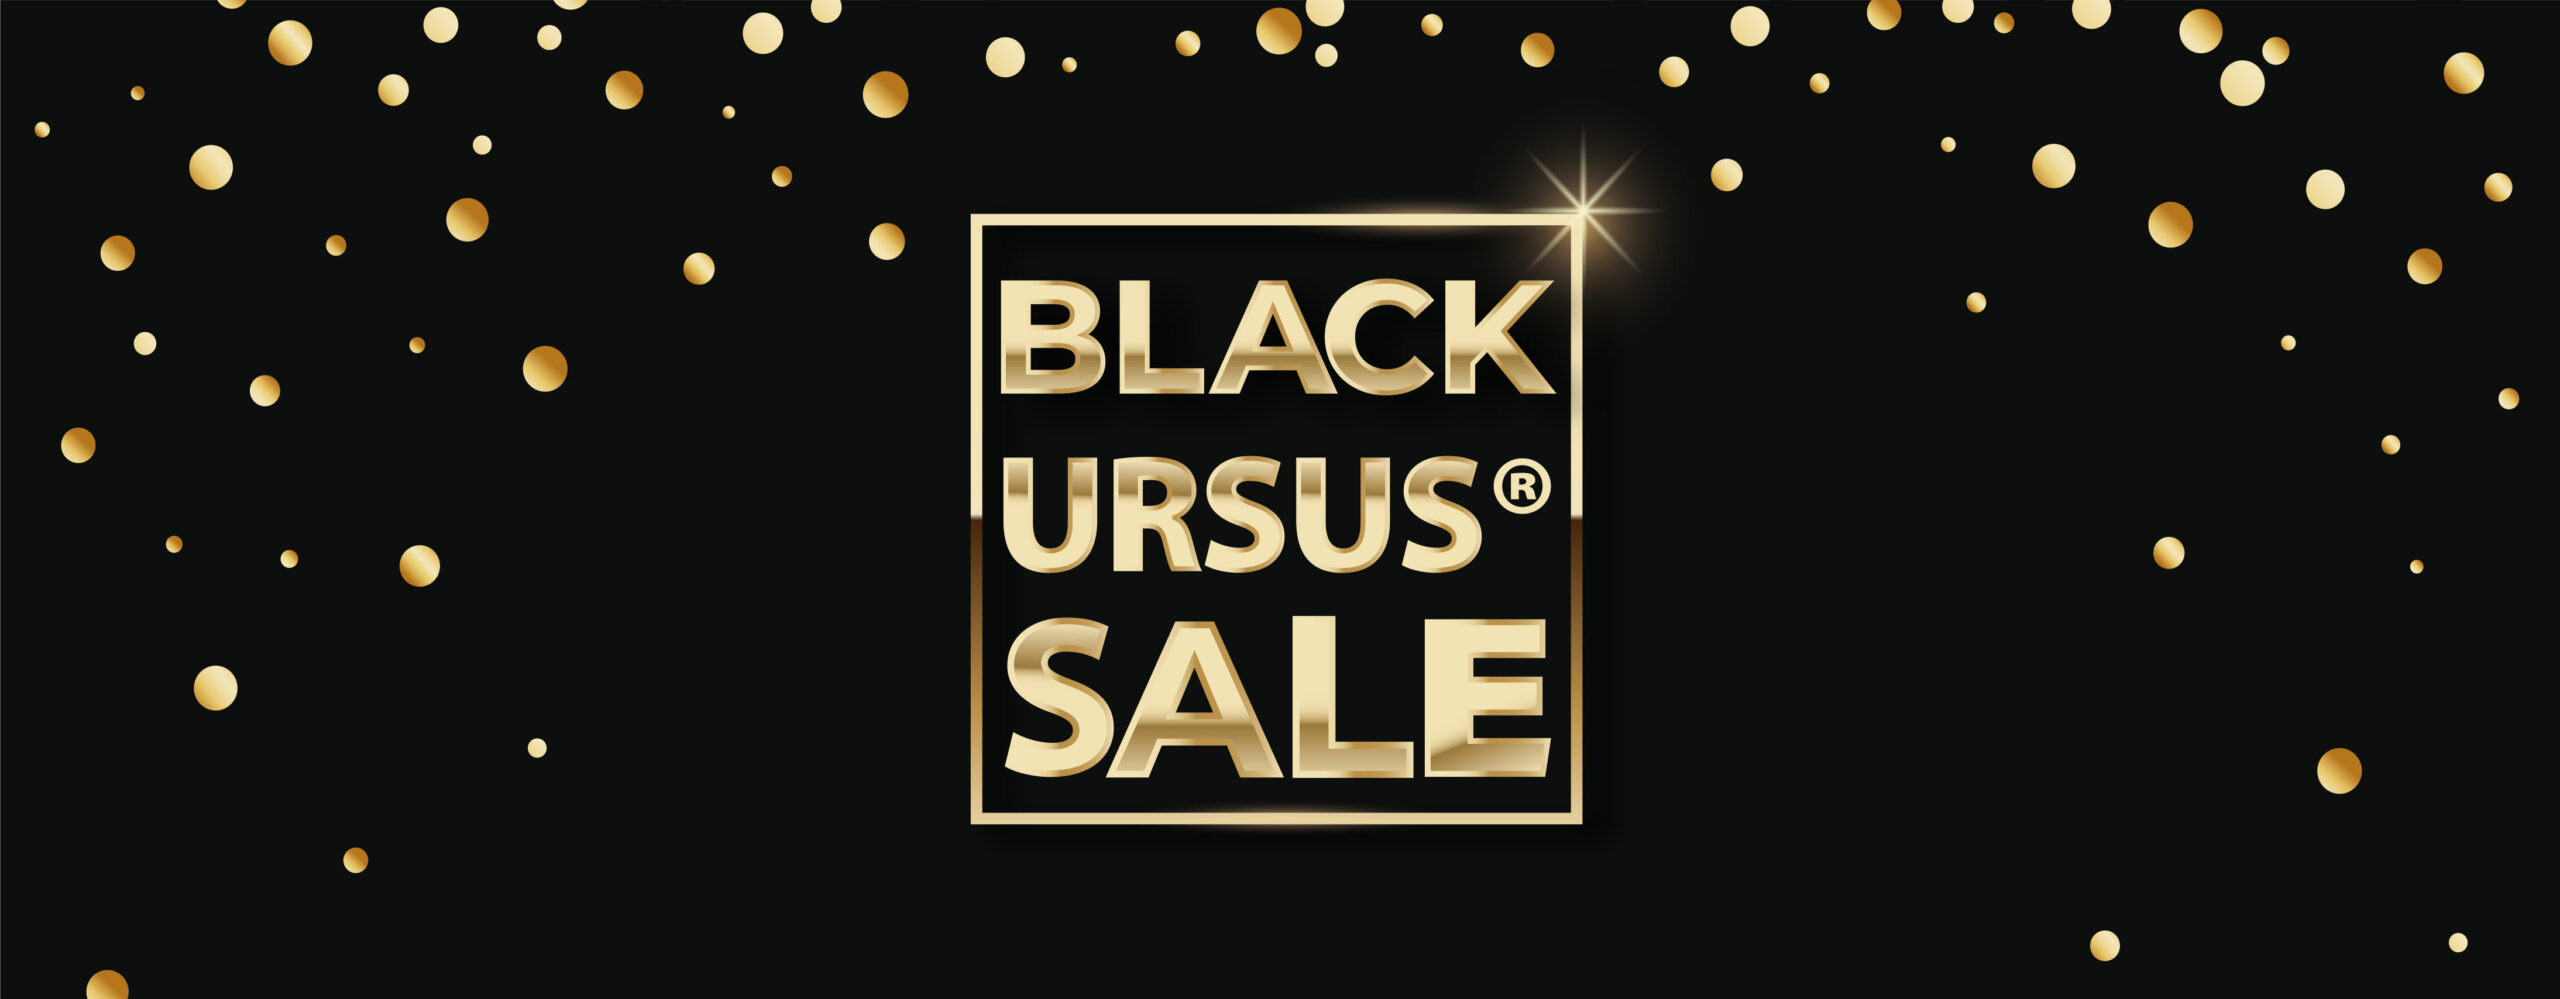 URSUS Banner Black Sale